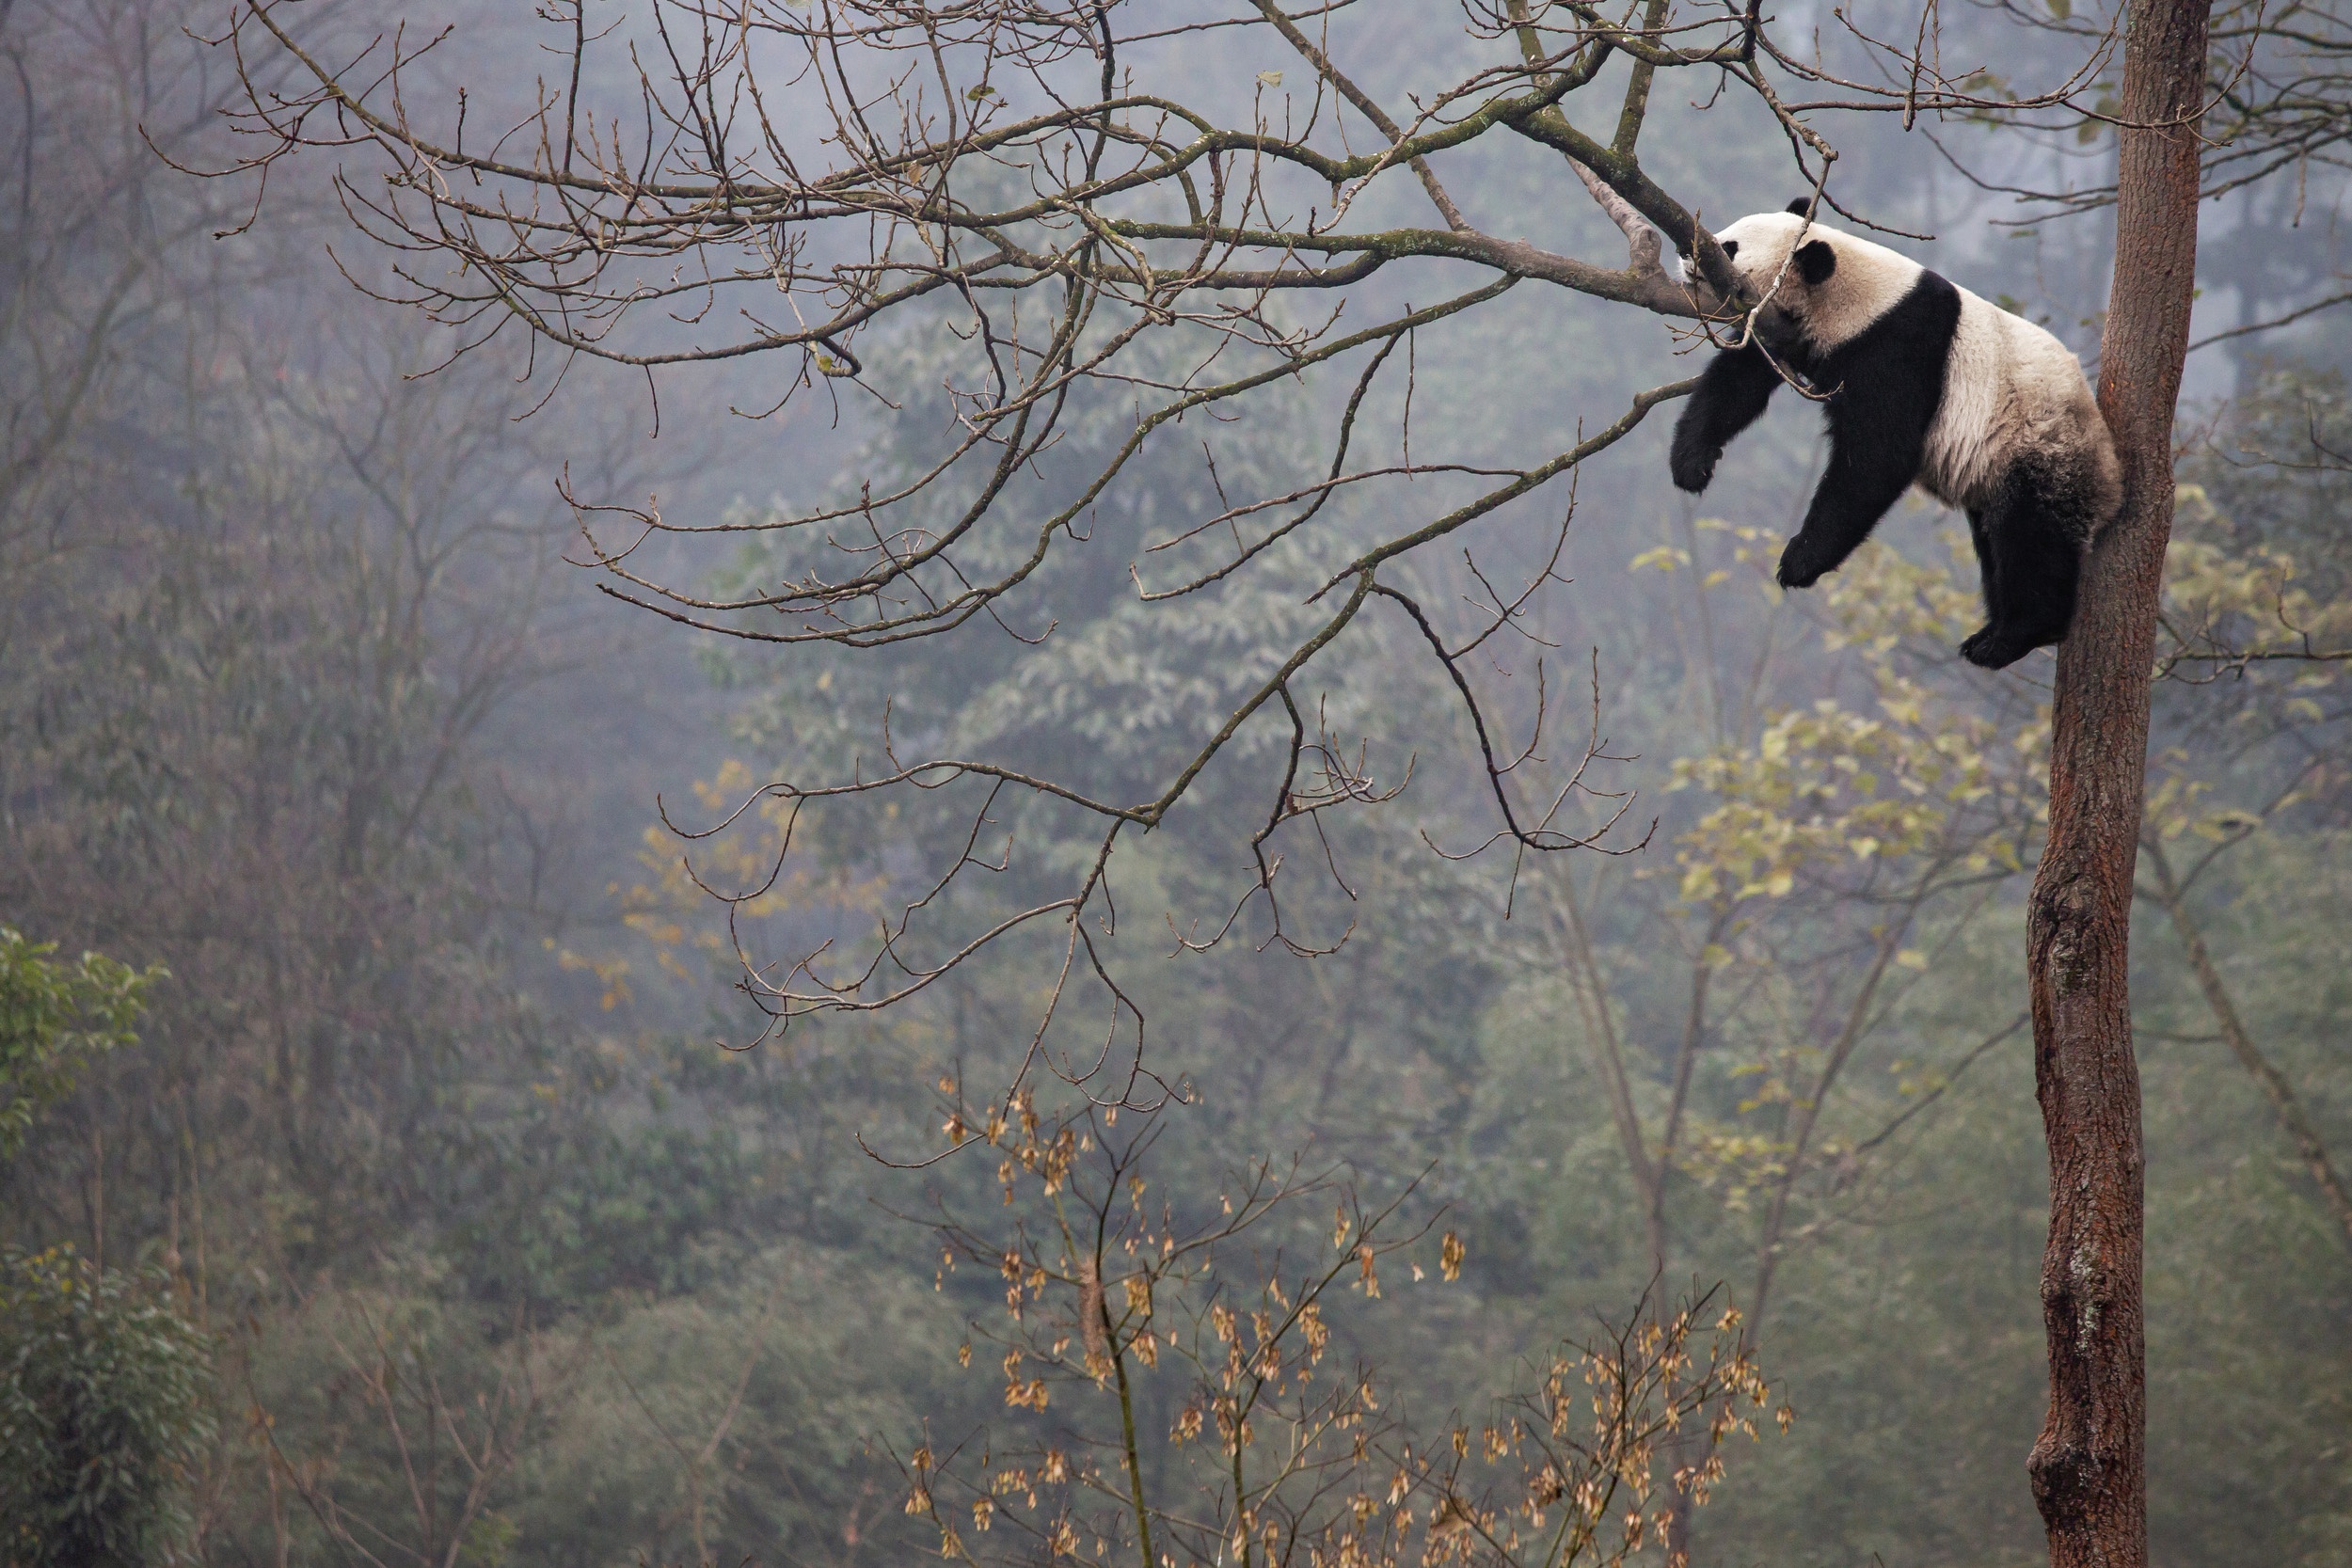 General 2500x1667 panda nature trees animals bears relaxing mammals